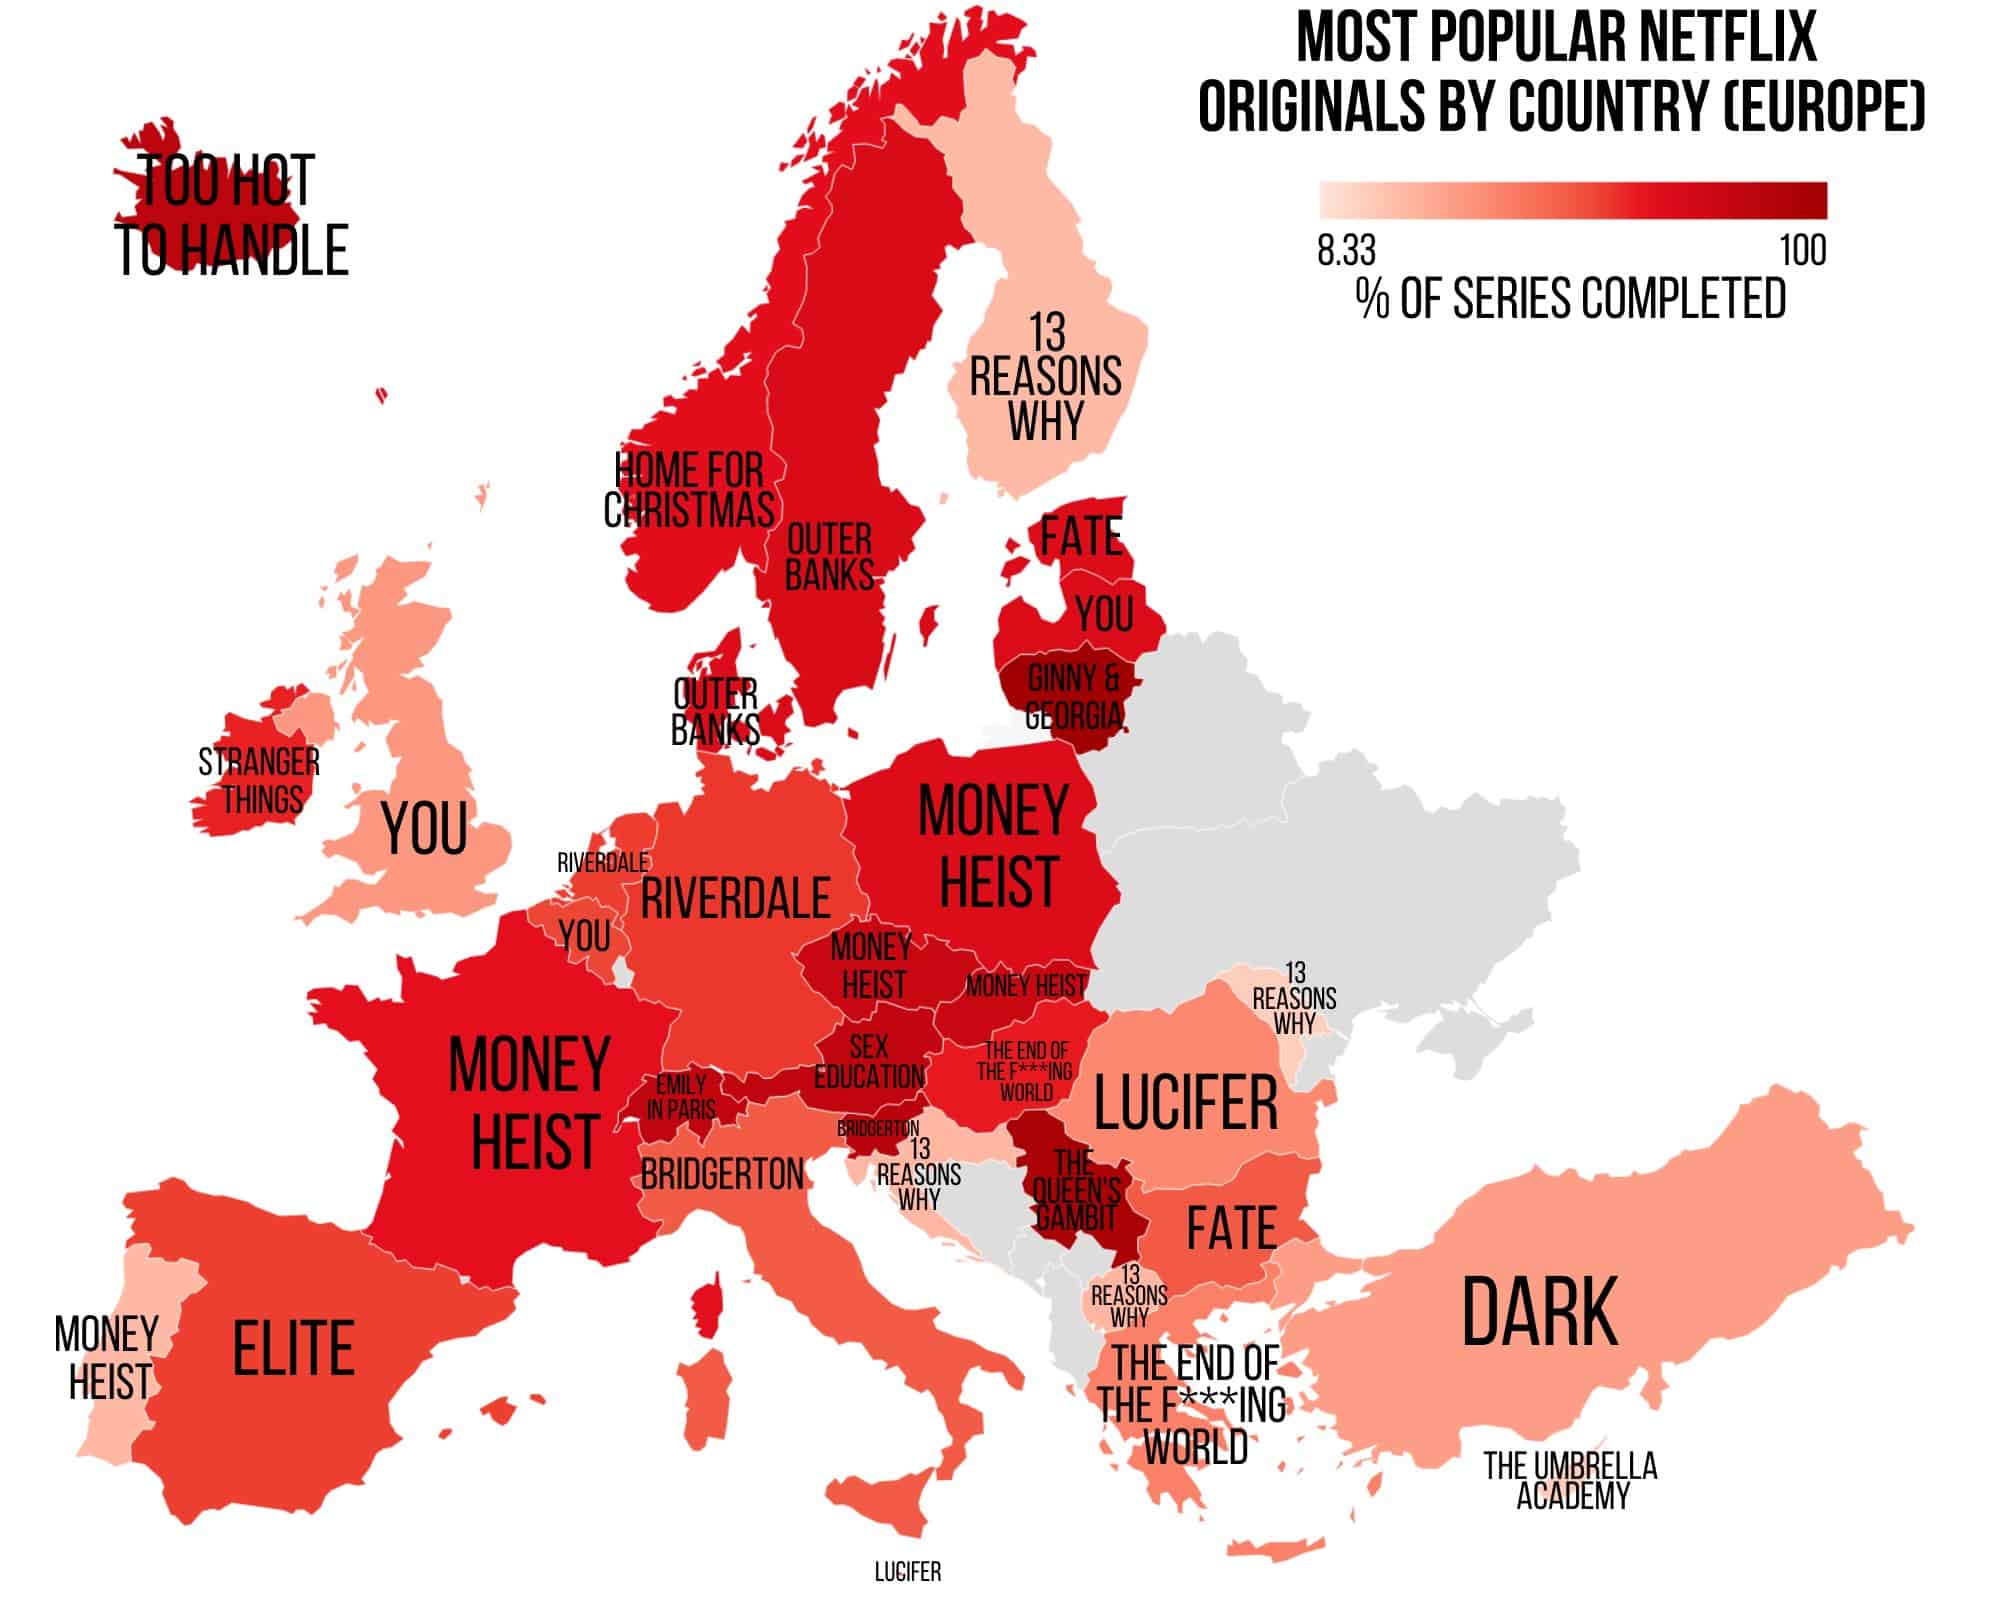 Most popular Netflix Originals in Europe